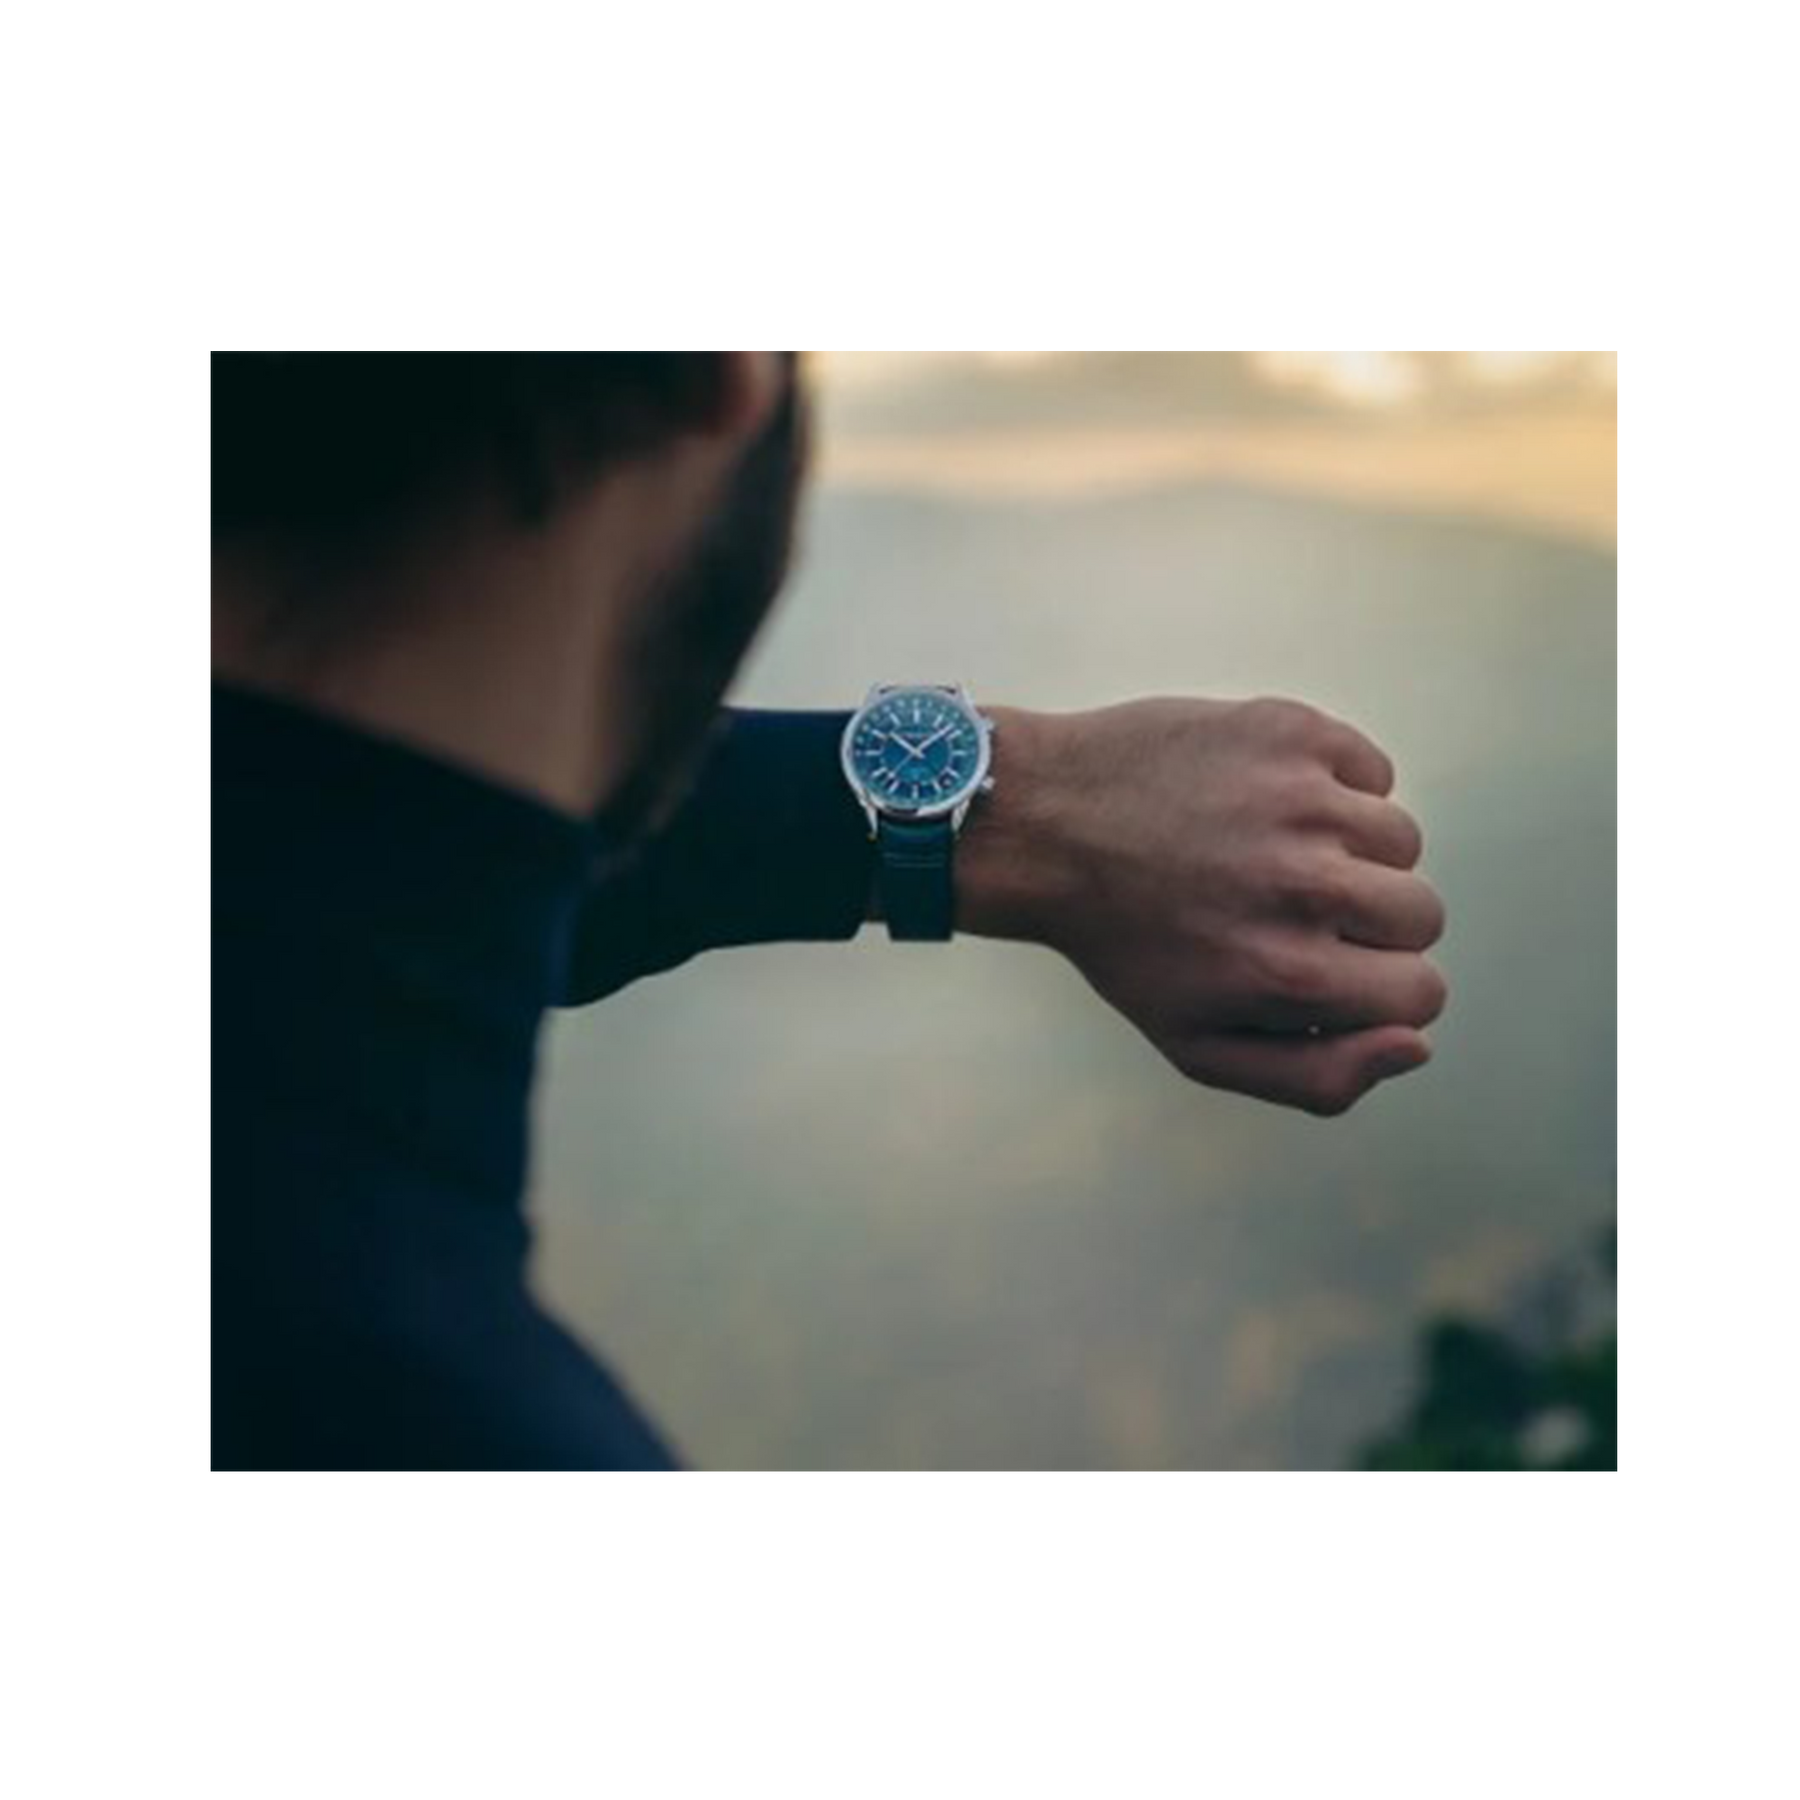 Raymond Weil Freelancer Men’s 40.50mm Automatic GMT Watch 2761-STC-50001